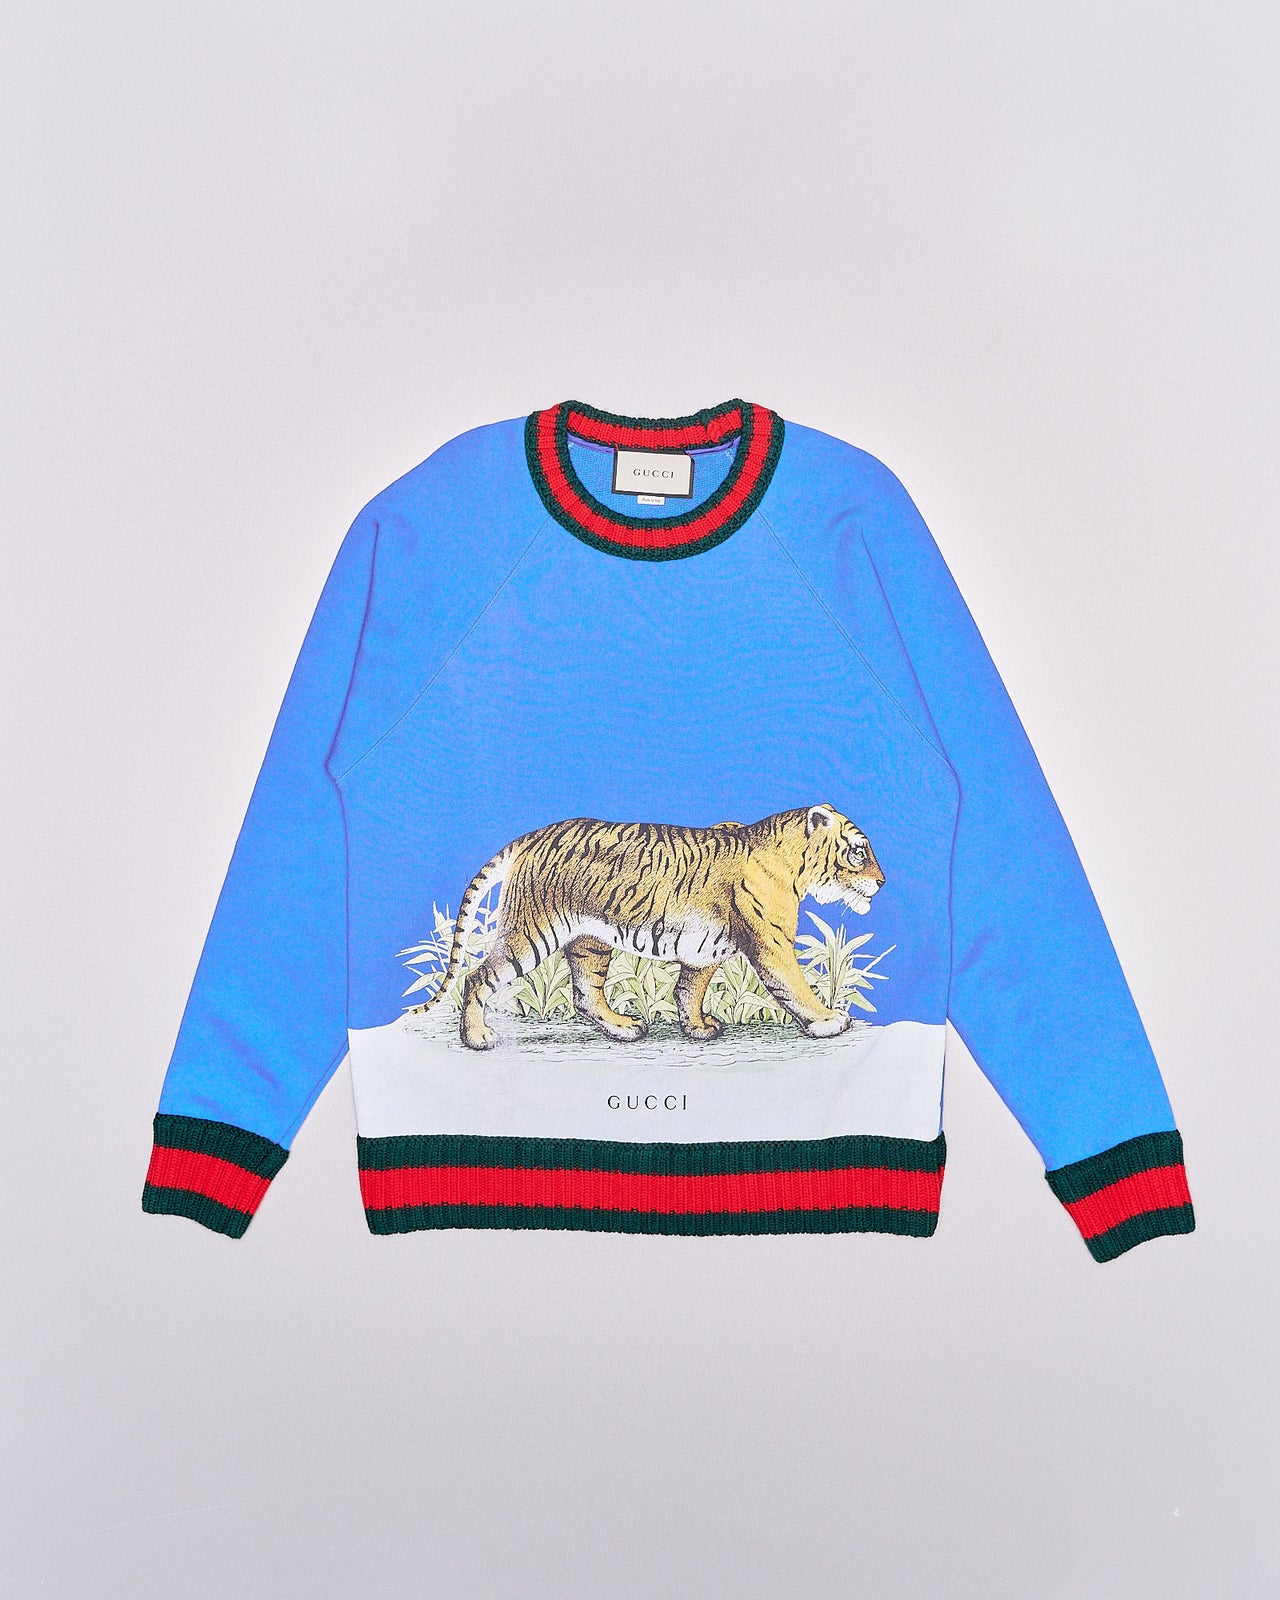 Gucci Tiger graphic sweatshirt